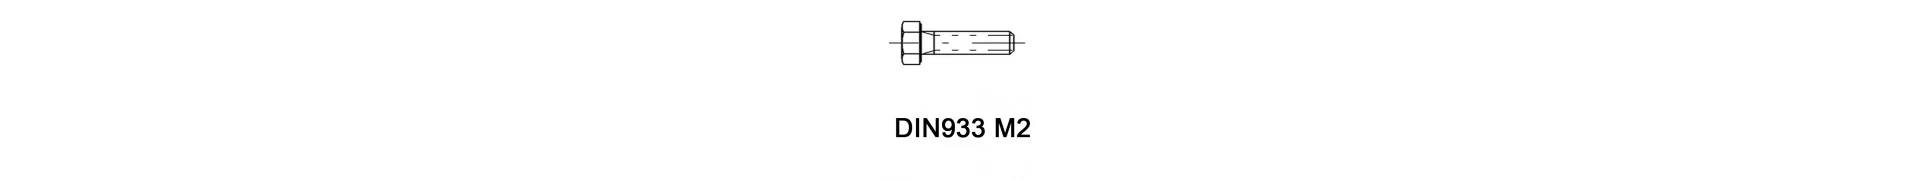 DIN933 M2